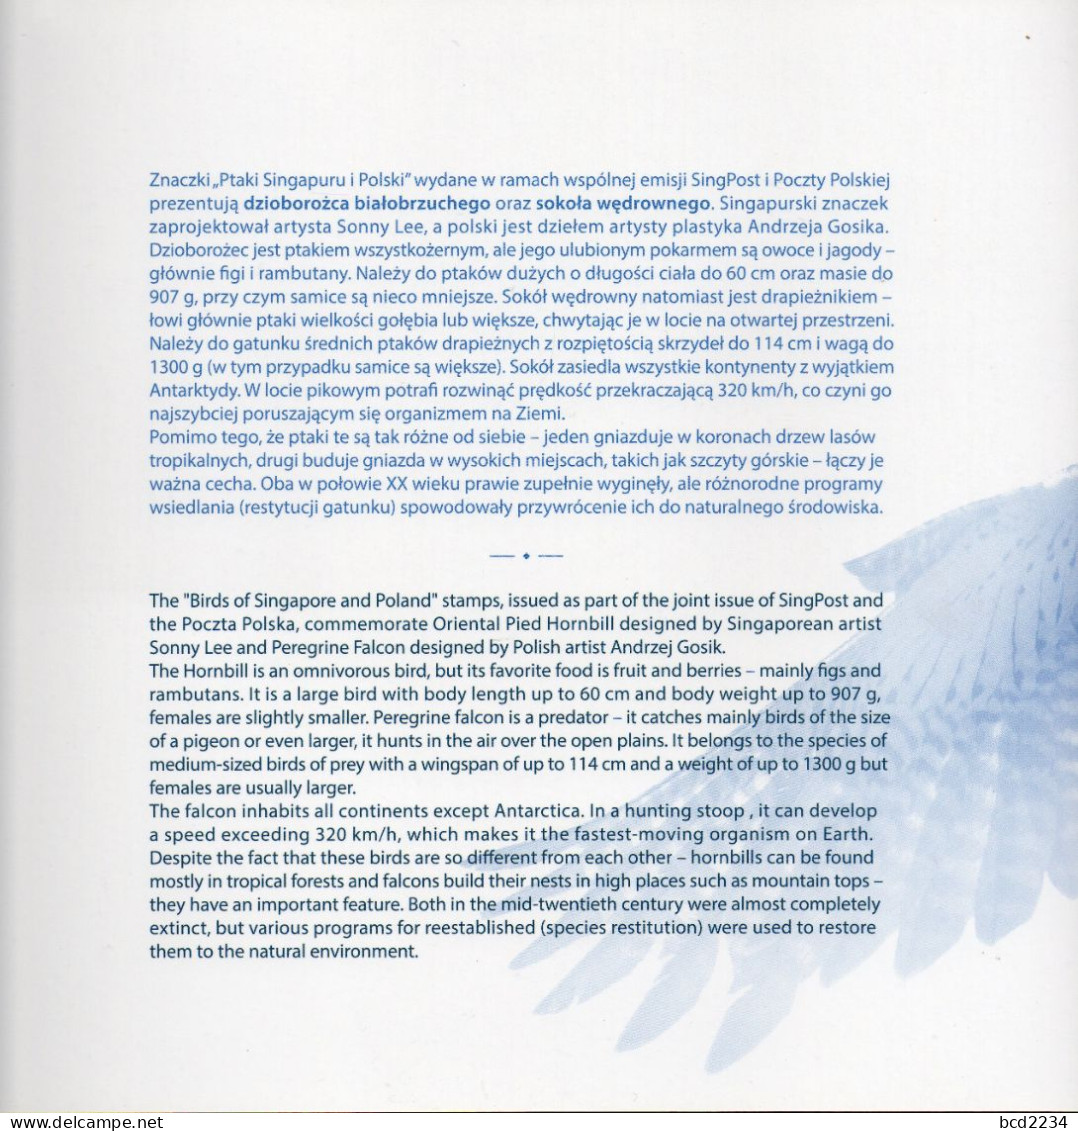 POLAND 2019 POLISH POST OFFICE LIMITED EDITION FOLDER: SINGAPORE POLAND BIRDS JOINT ISSUE MS HORNBILL PEREGRINE FALCON - Briefe U. Dokumente